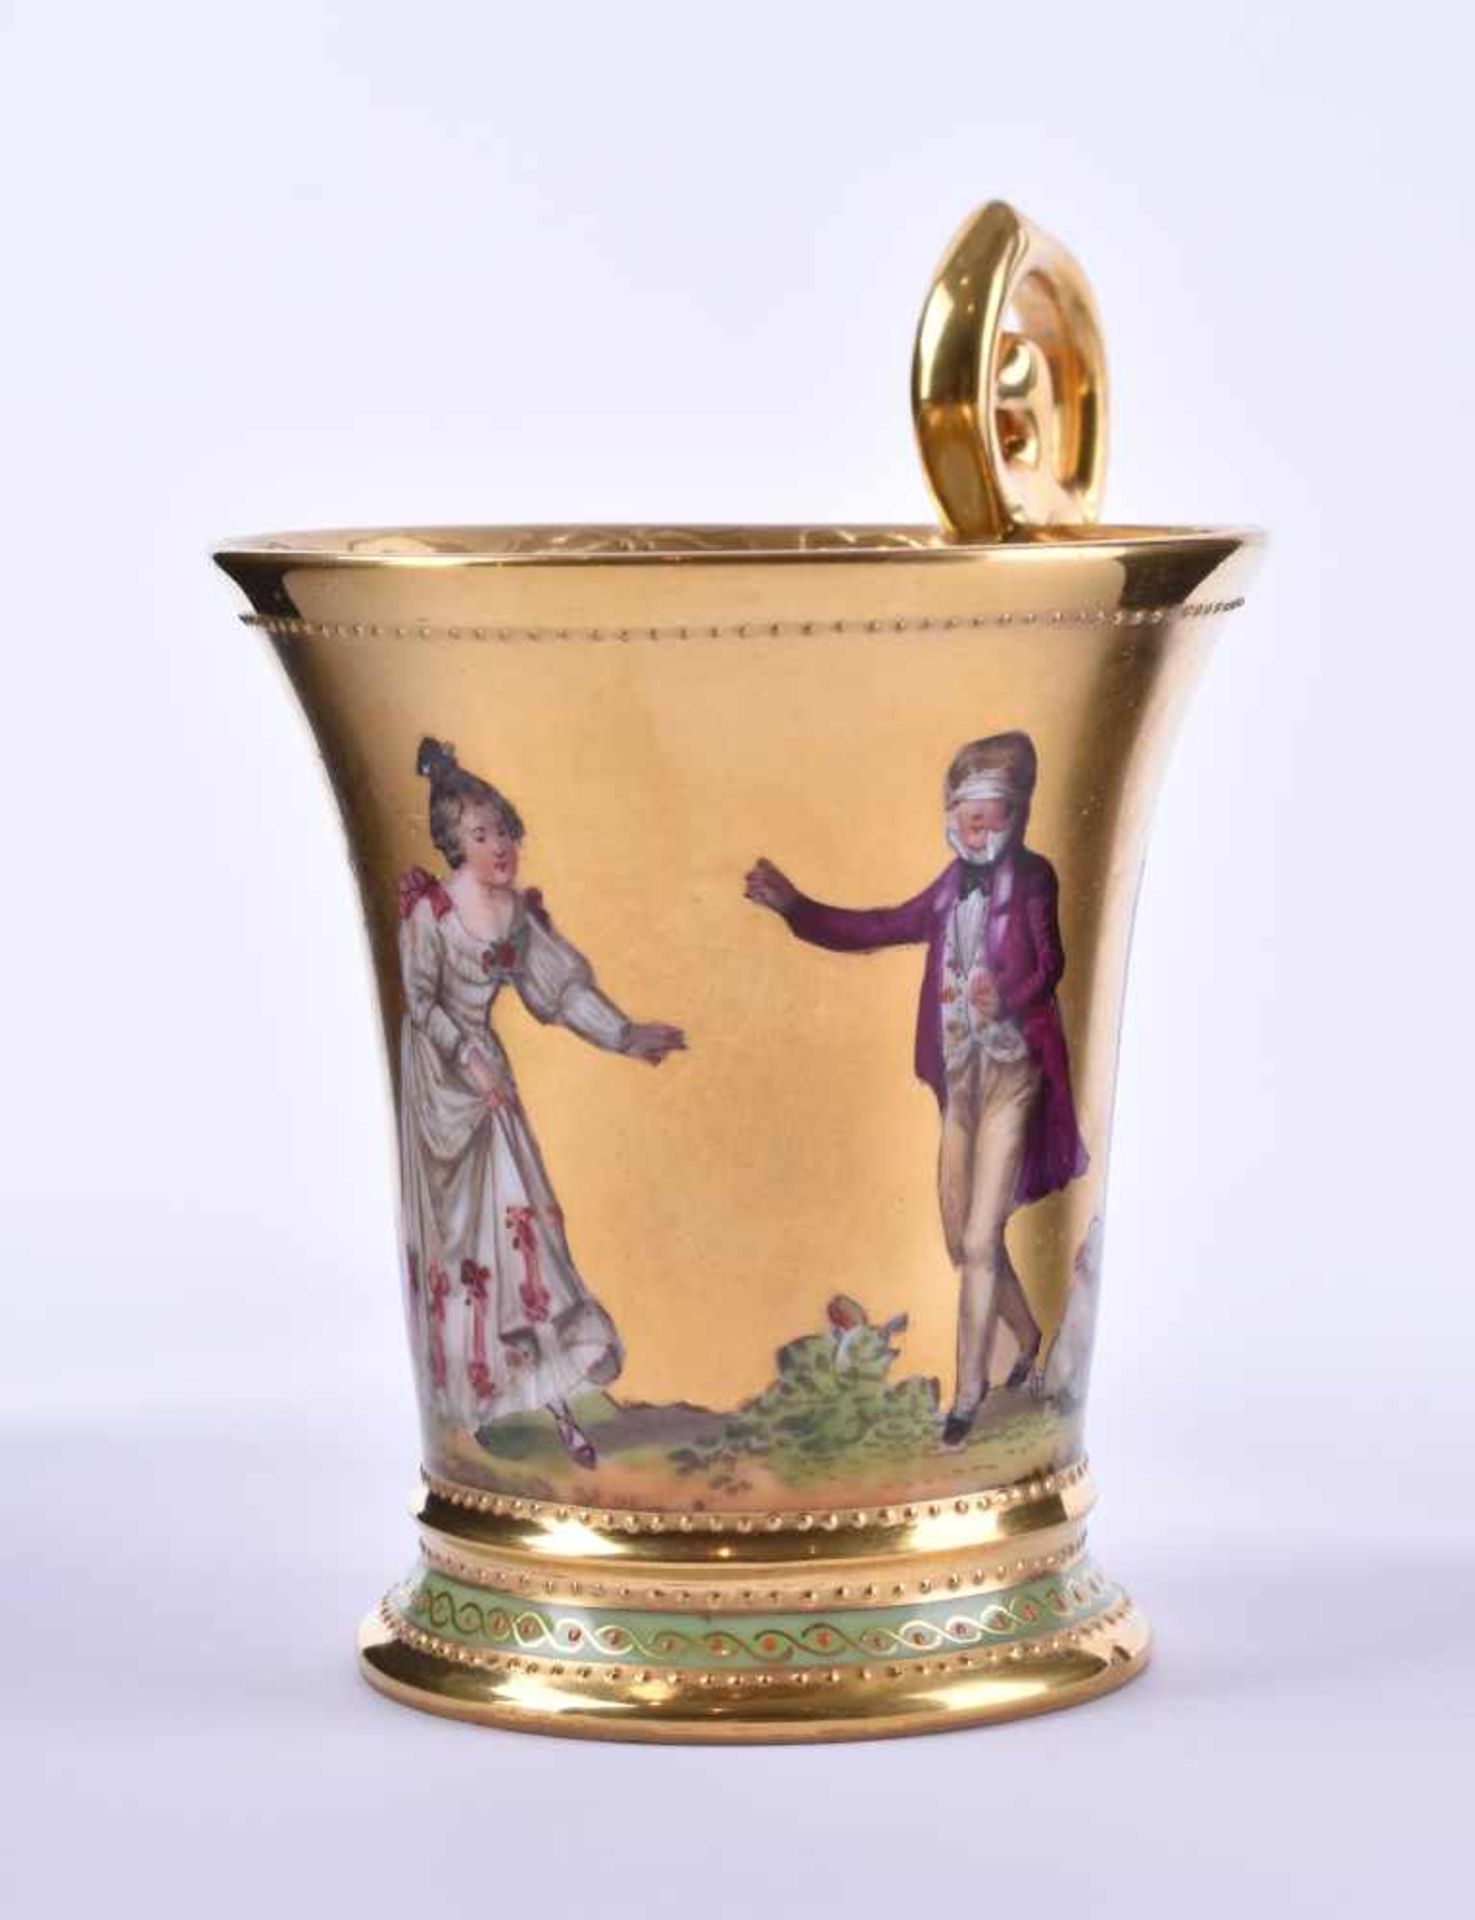 Biedermeier Tasse Thüringenreich goldstaffiertBiedermeier mug Thuringiarichly gold staffed - Image 5 of 6